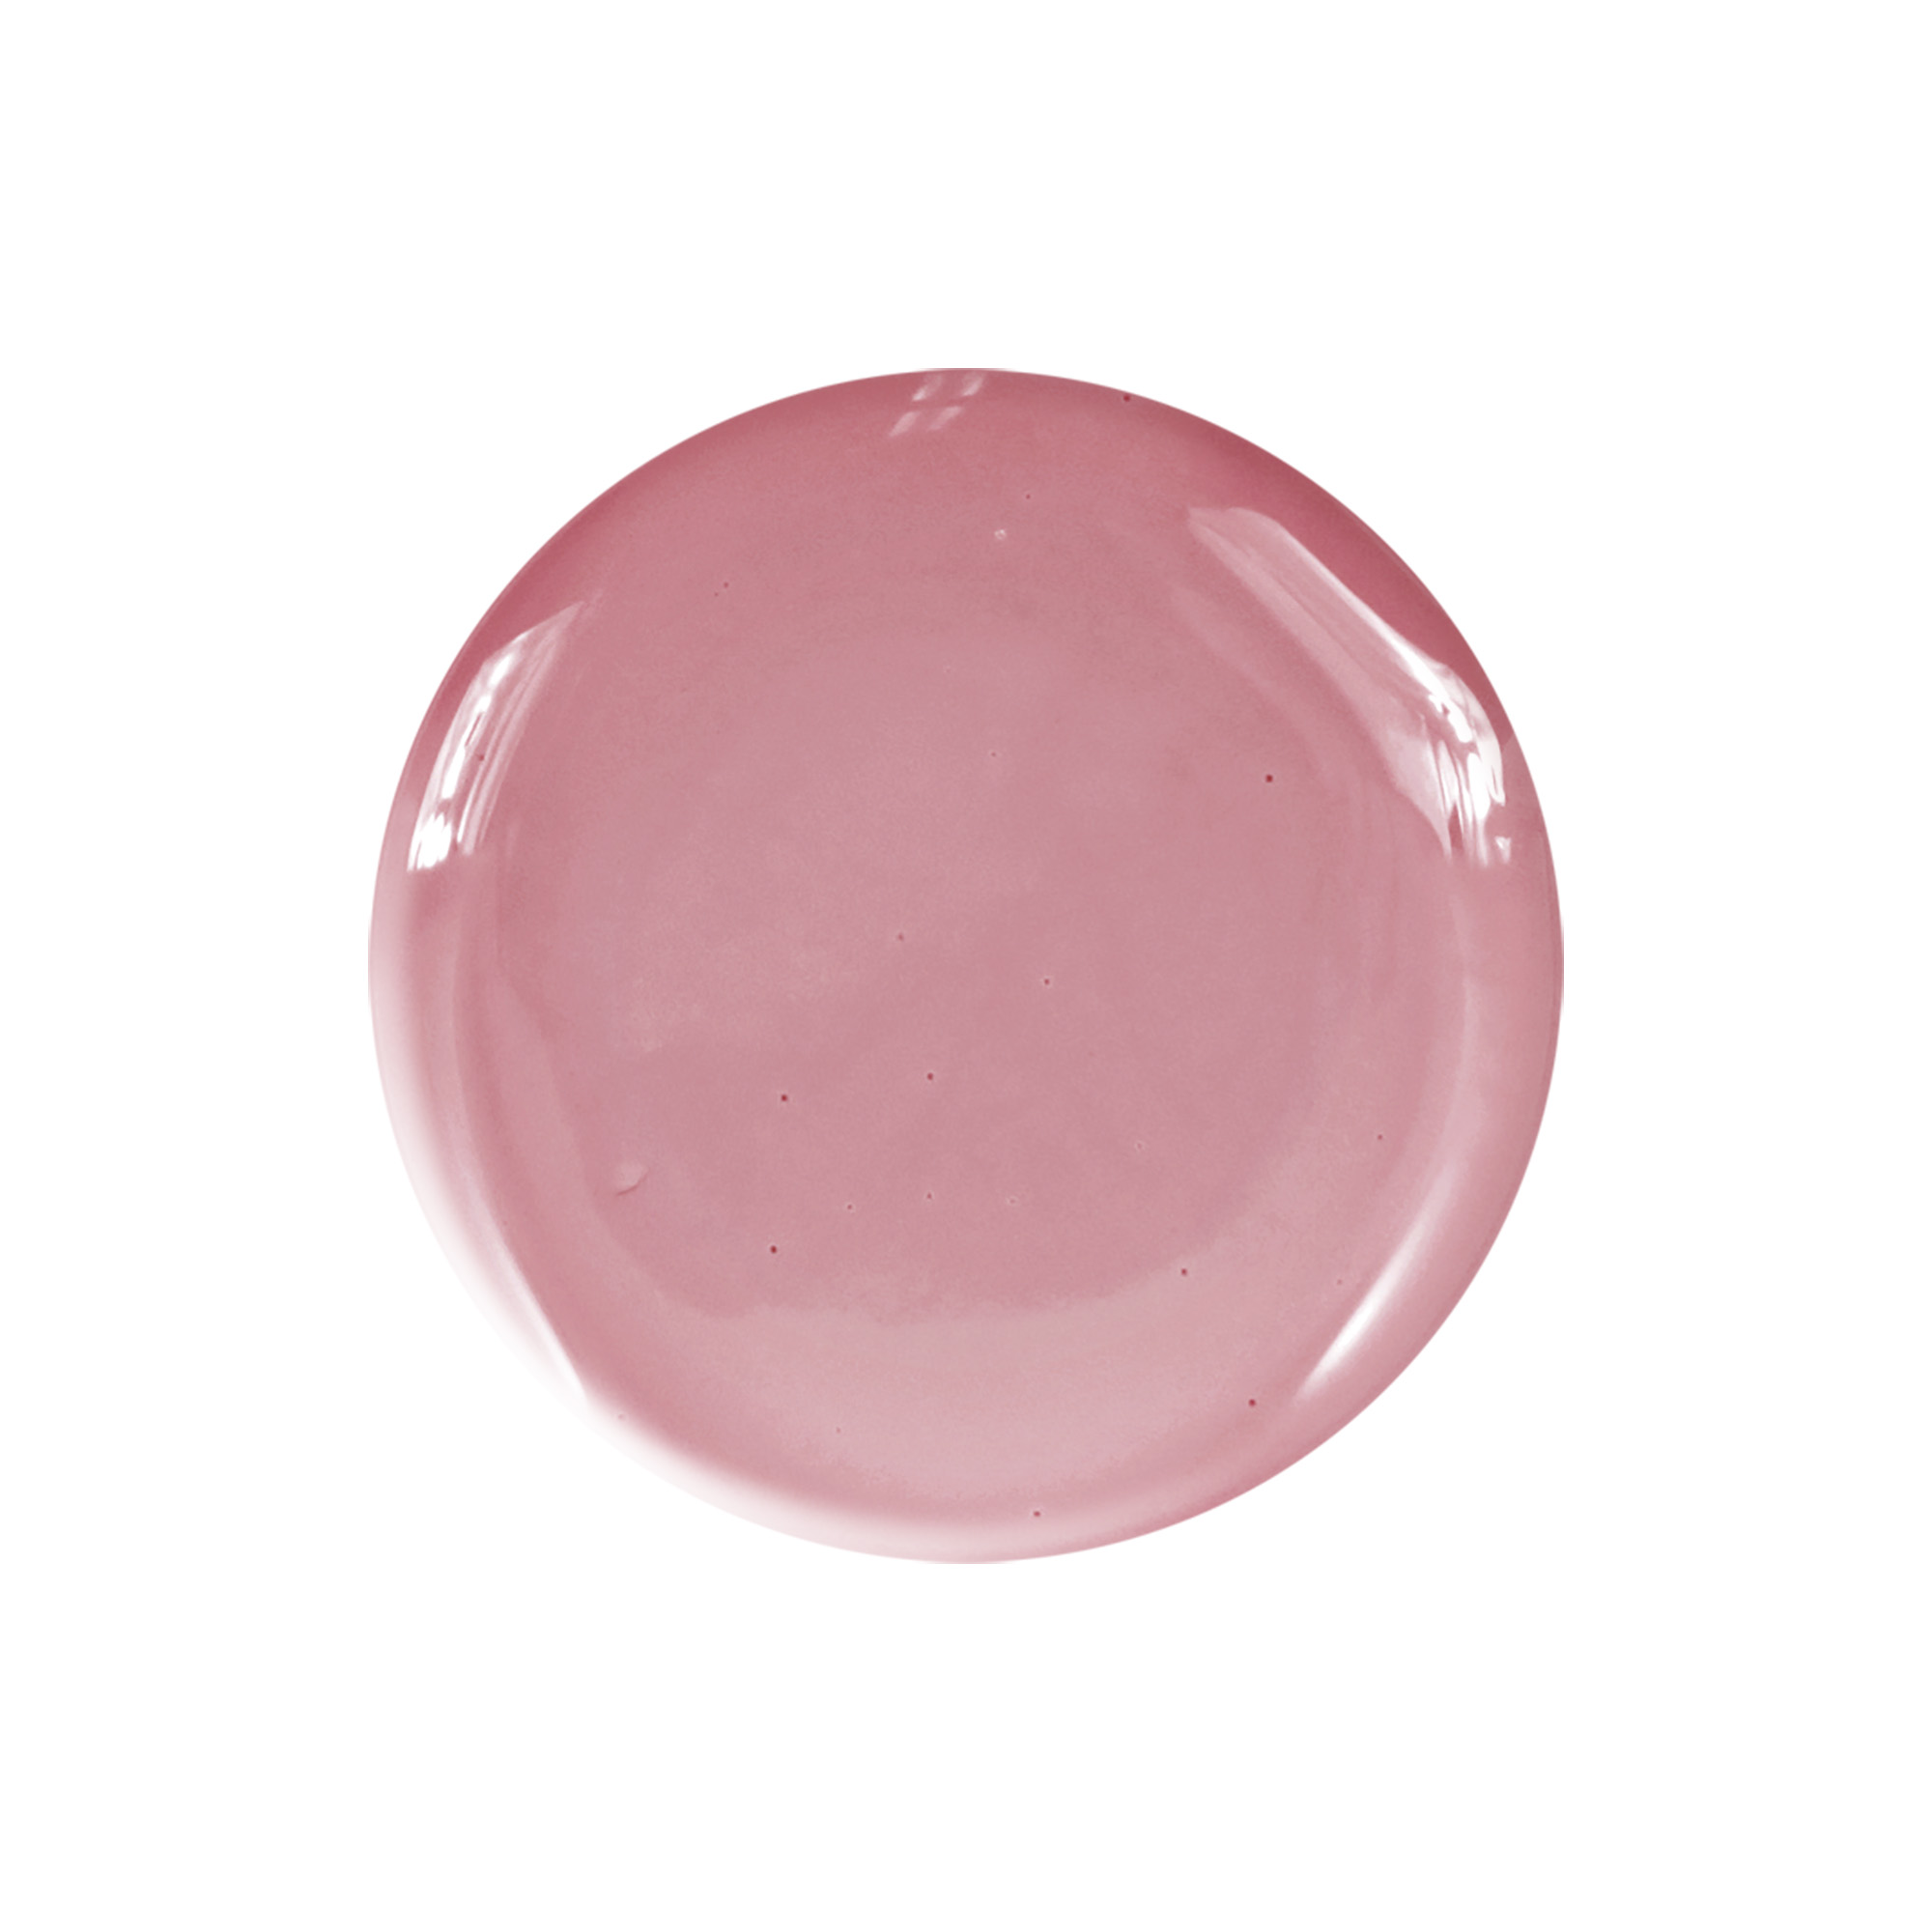 Nagellack Skinlover intensiv nude rosa 10 ml TNS